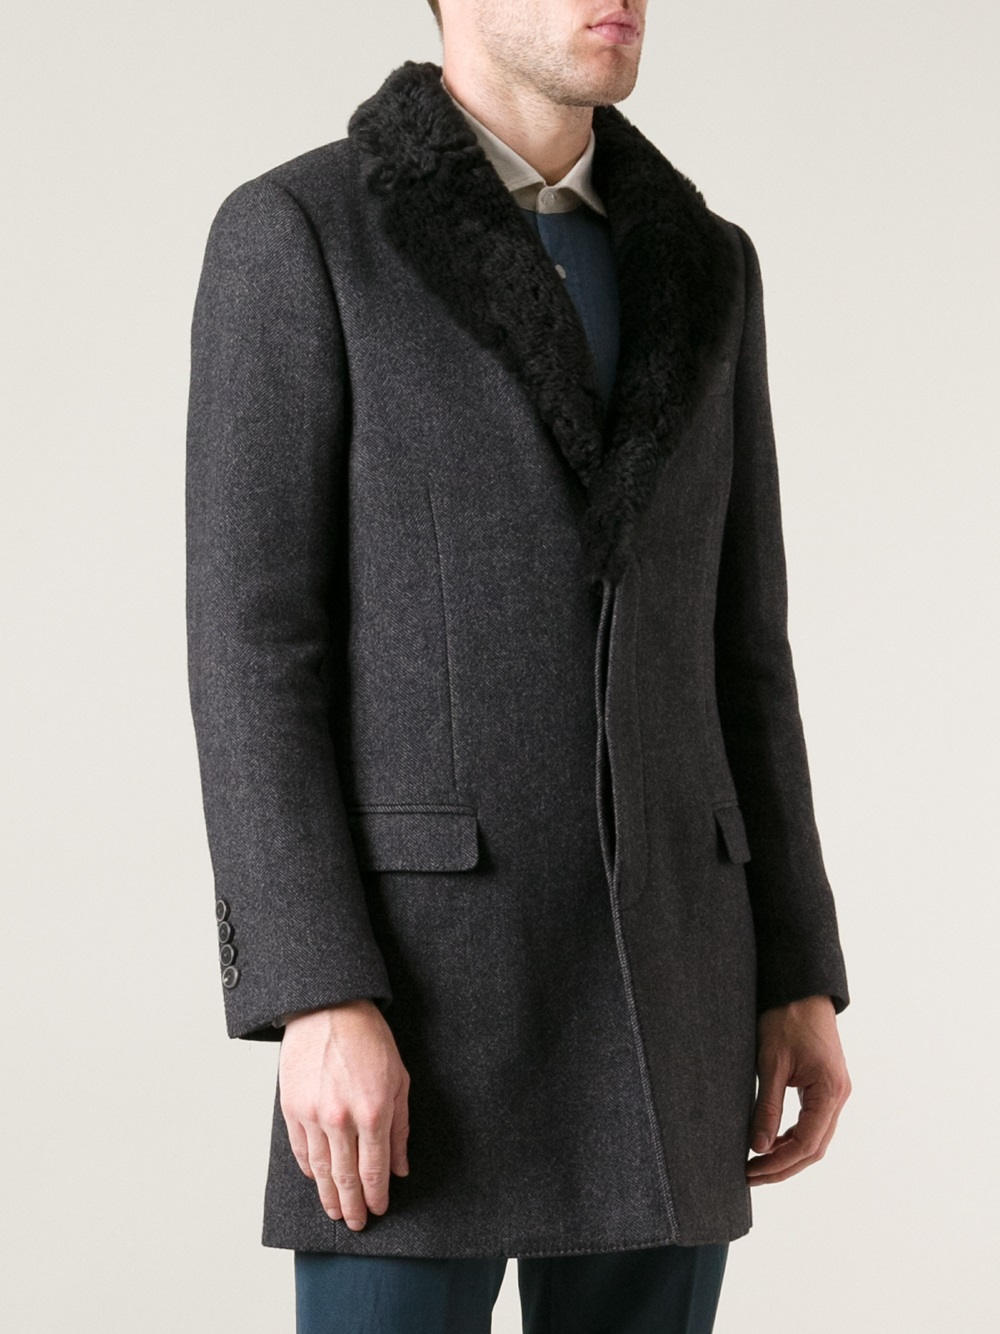 Dolce & Gabbana Herringbone Overcoat in Grey (Gray) for Men - Lyst